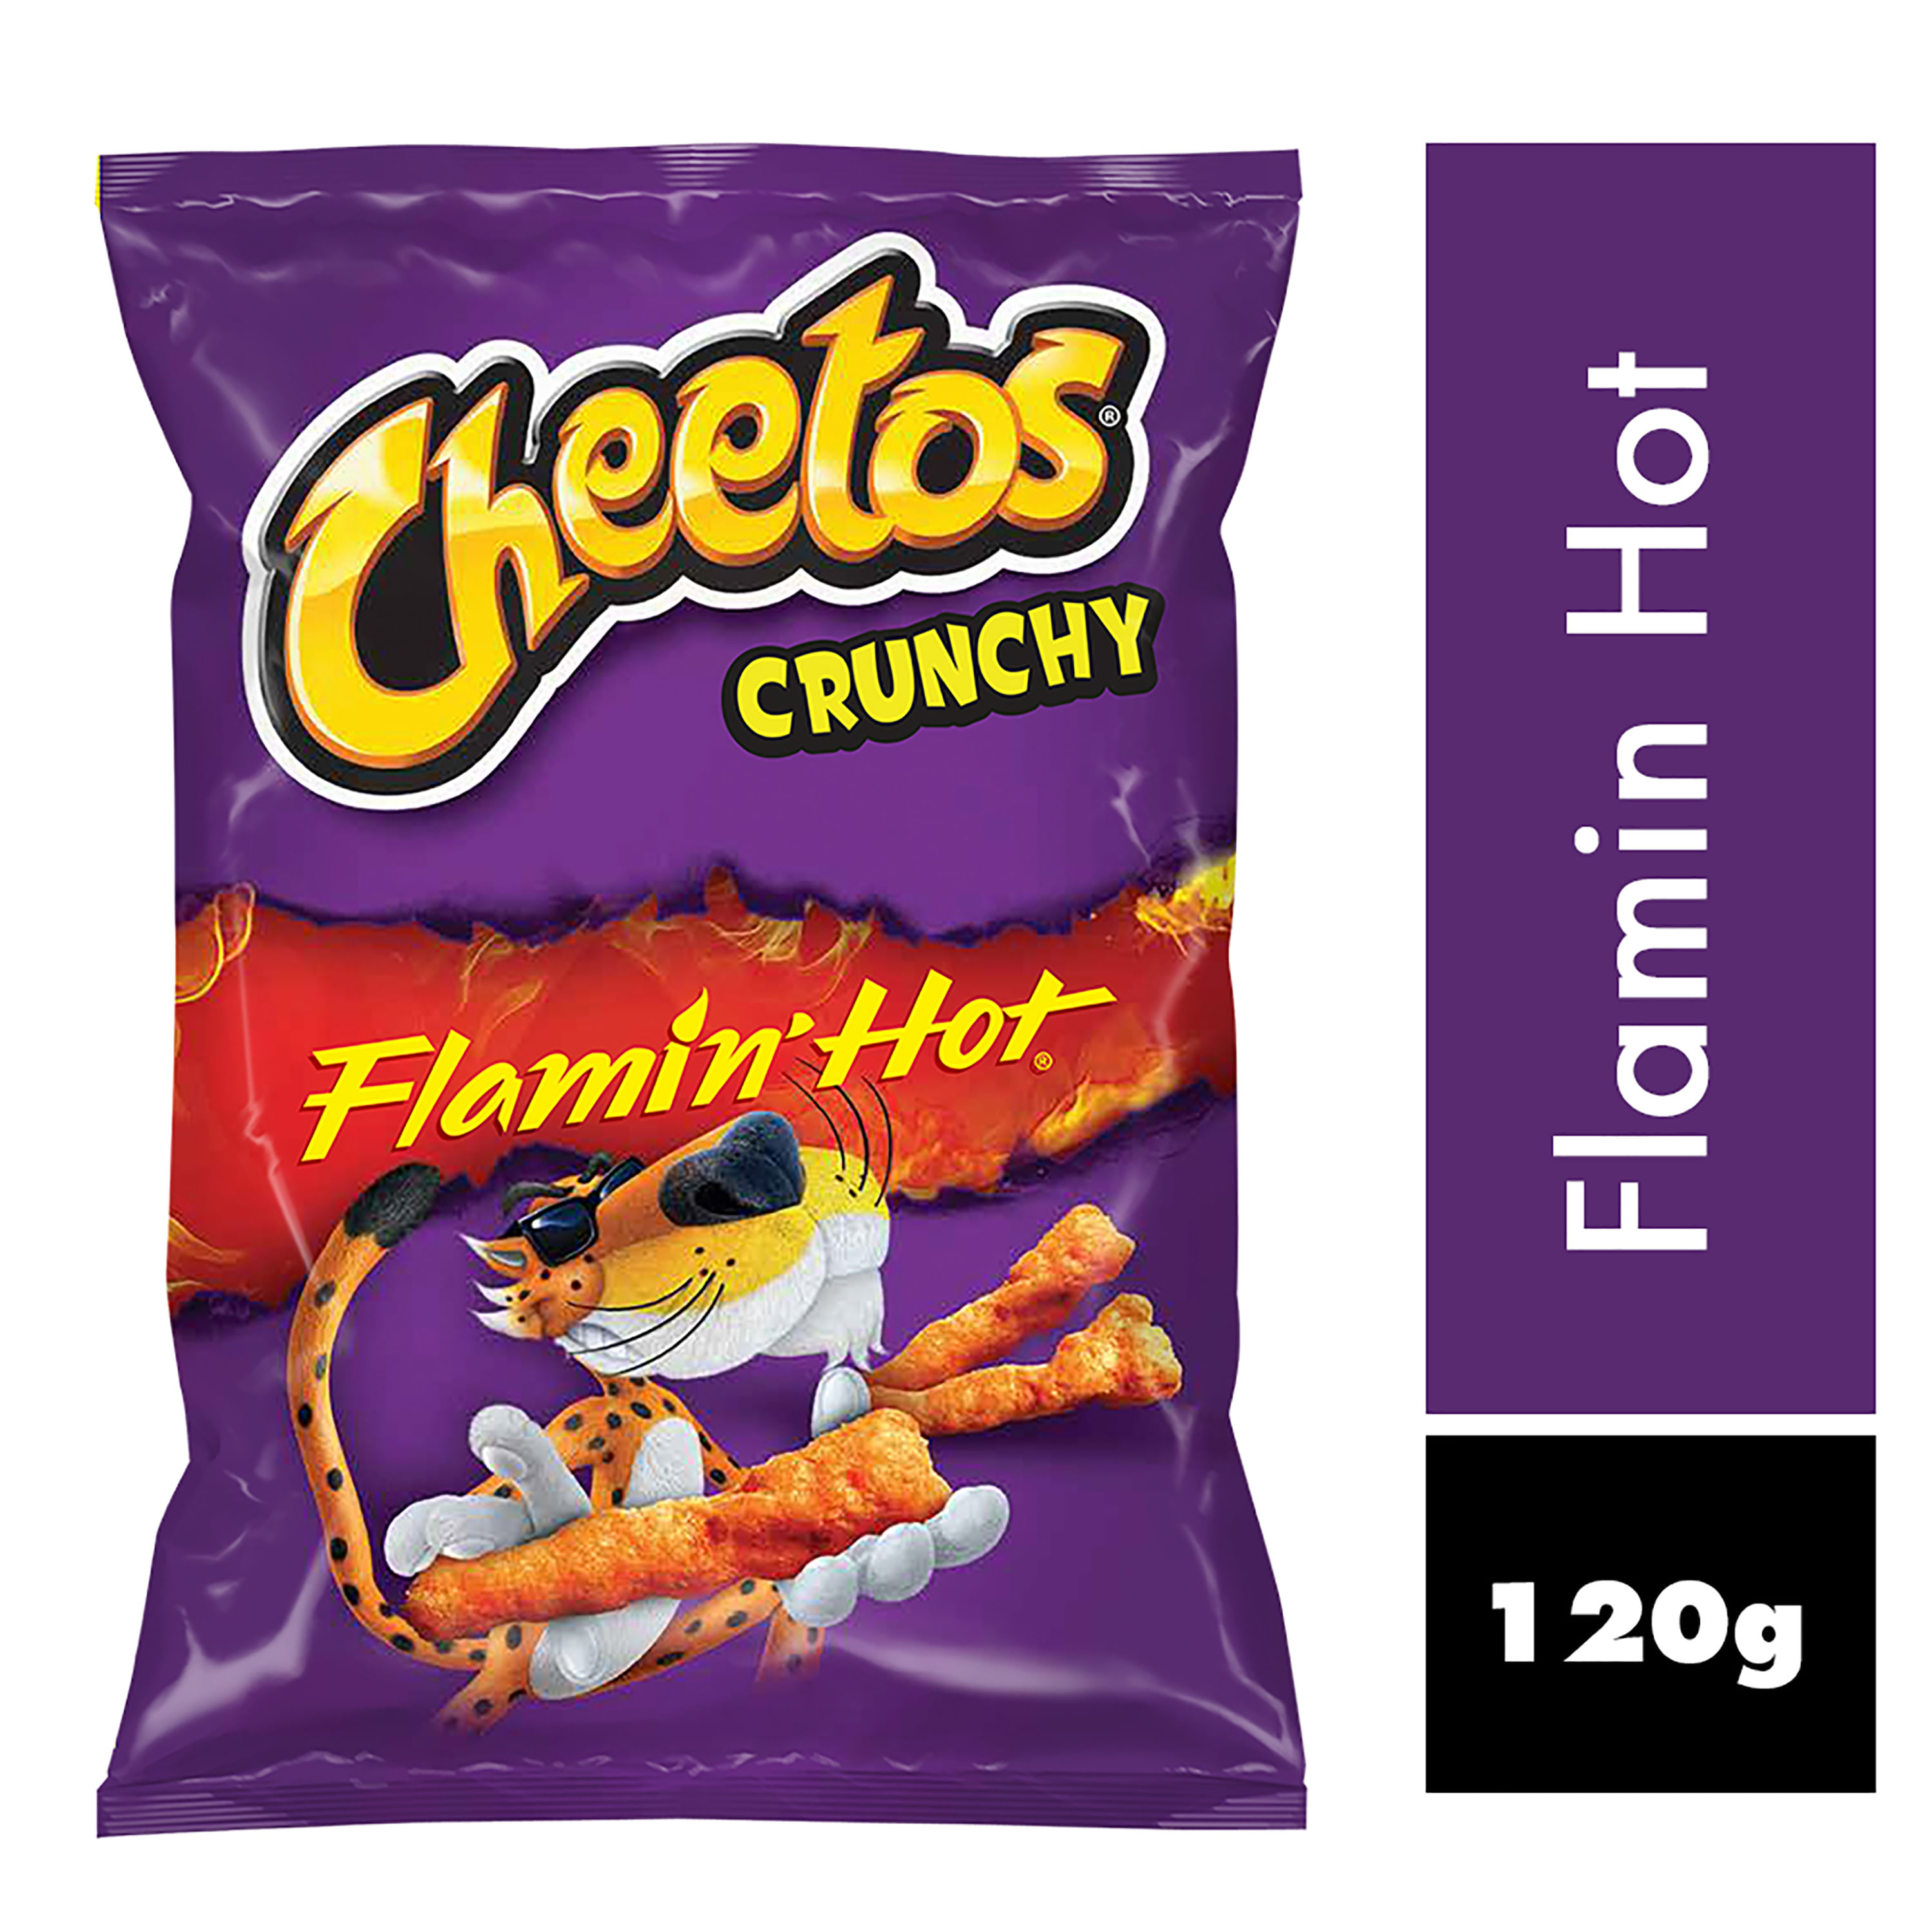 Cheetos-Crunchy-Flamin-Hot-120gr-1-33575